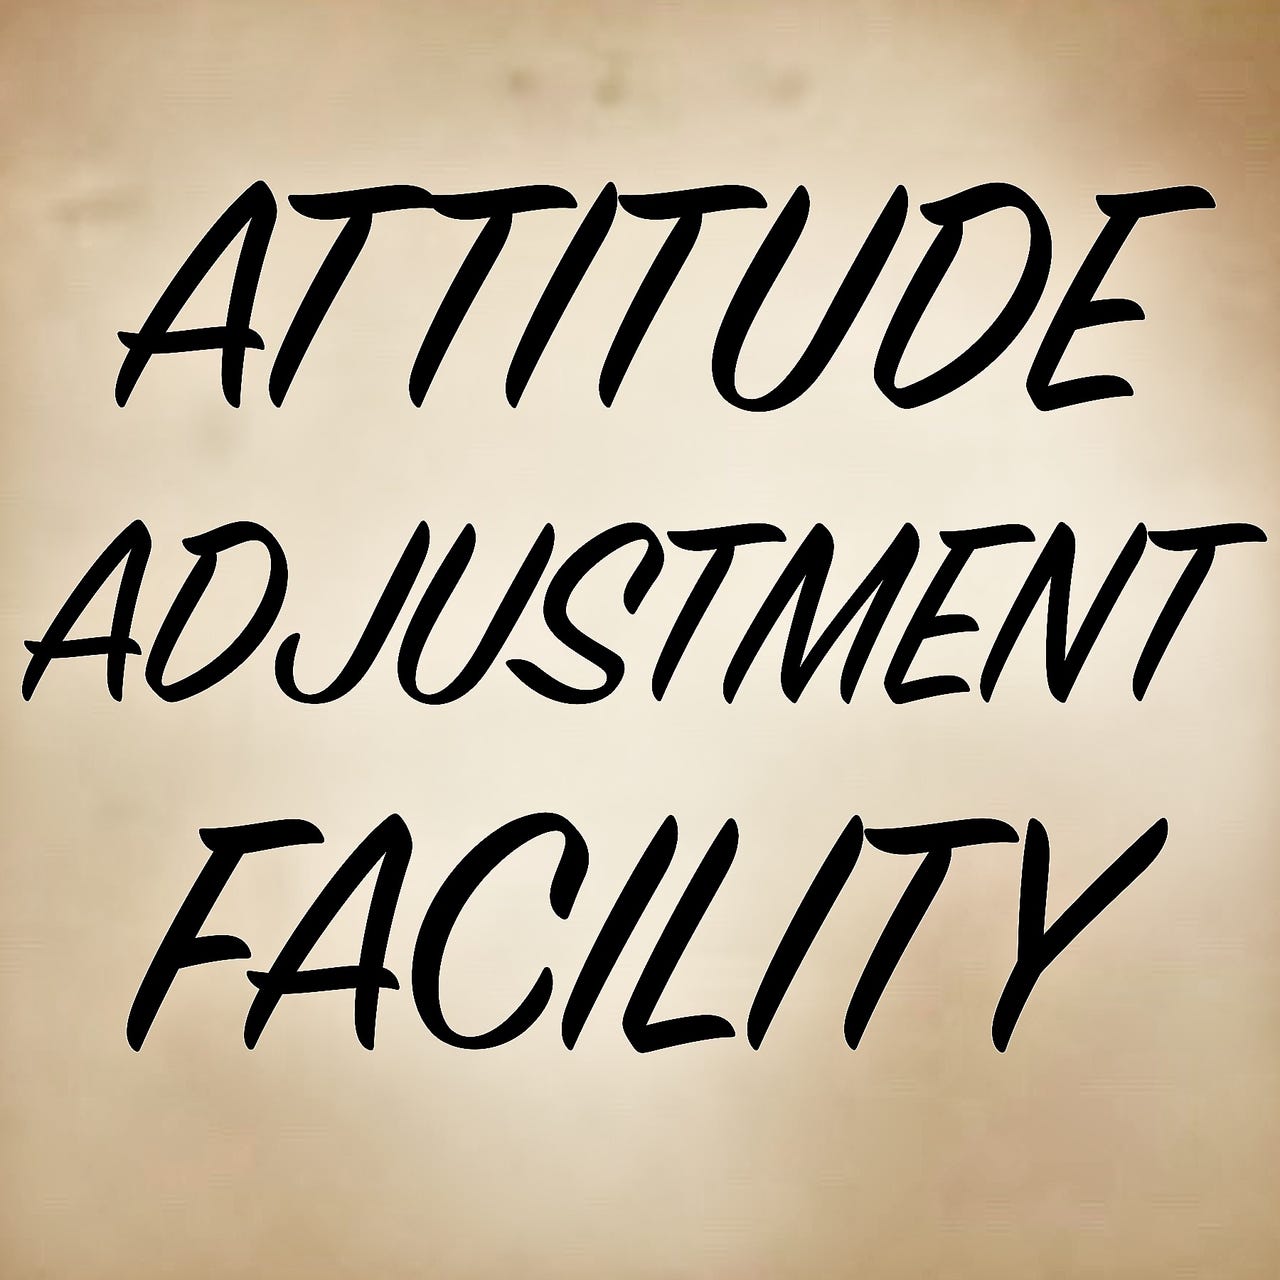 Artwork for Attitude Adjustment Facility